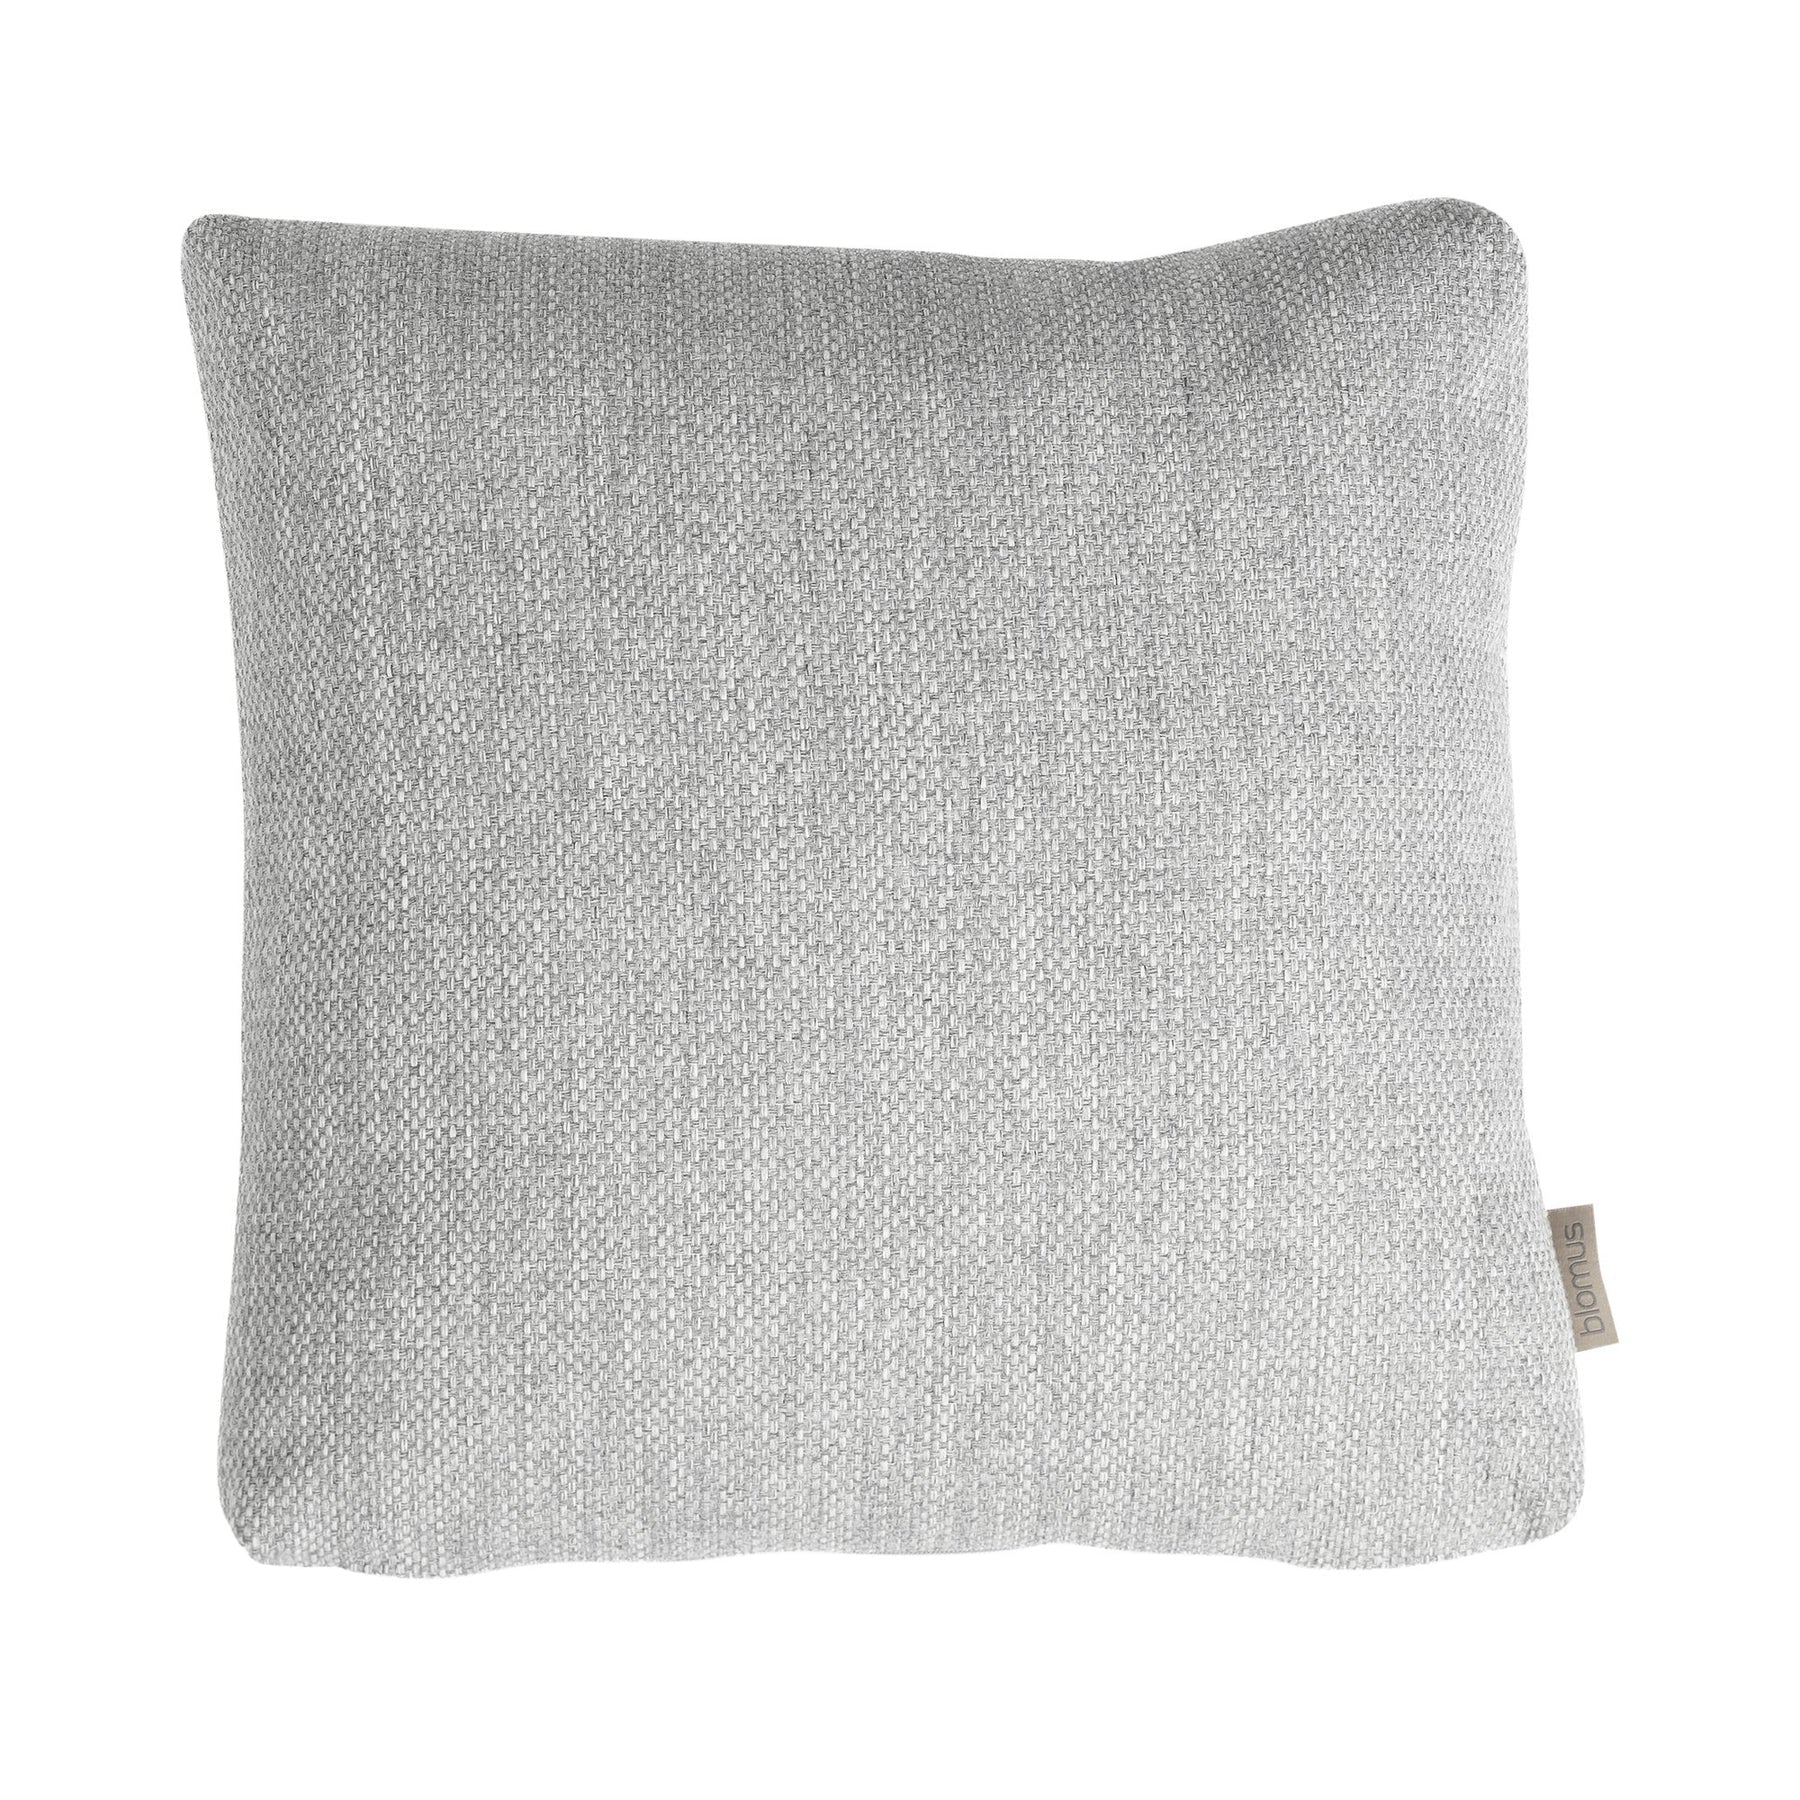 GROW Cushions For Outdoor Patio Furniture Cloud (light grey)